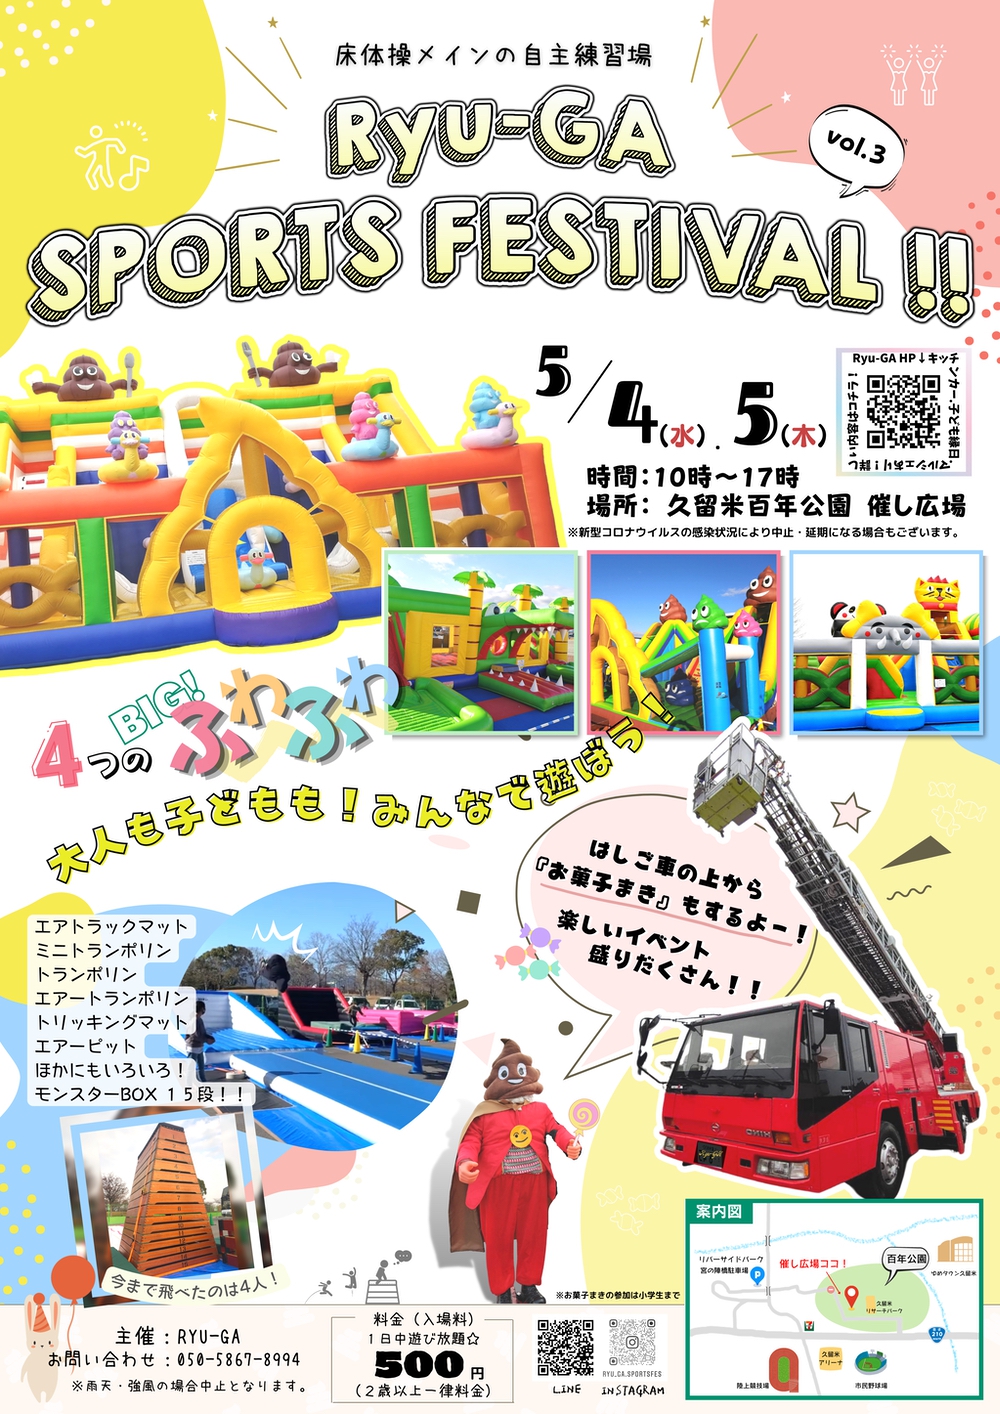 Ryu-GA SPORTS FESTIVAL！巨大ふわふわ遊具、はしご車からお菓子まきなど開催【久留米市】